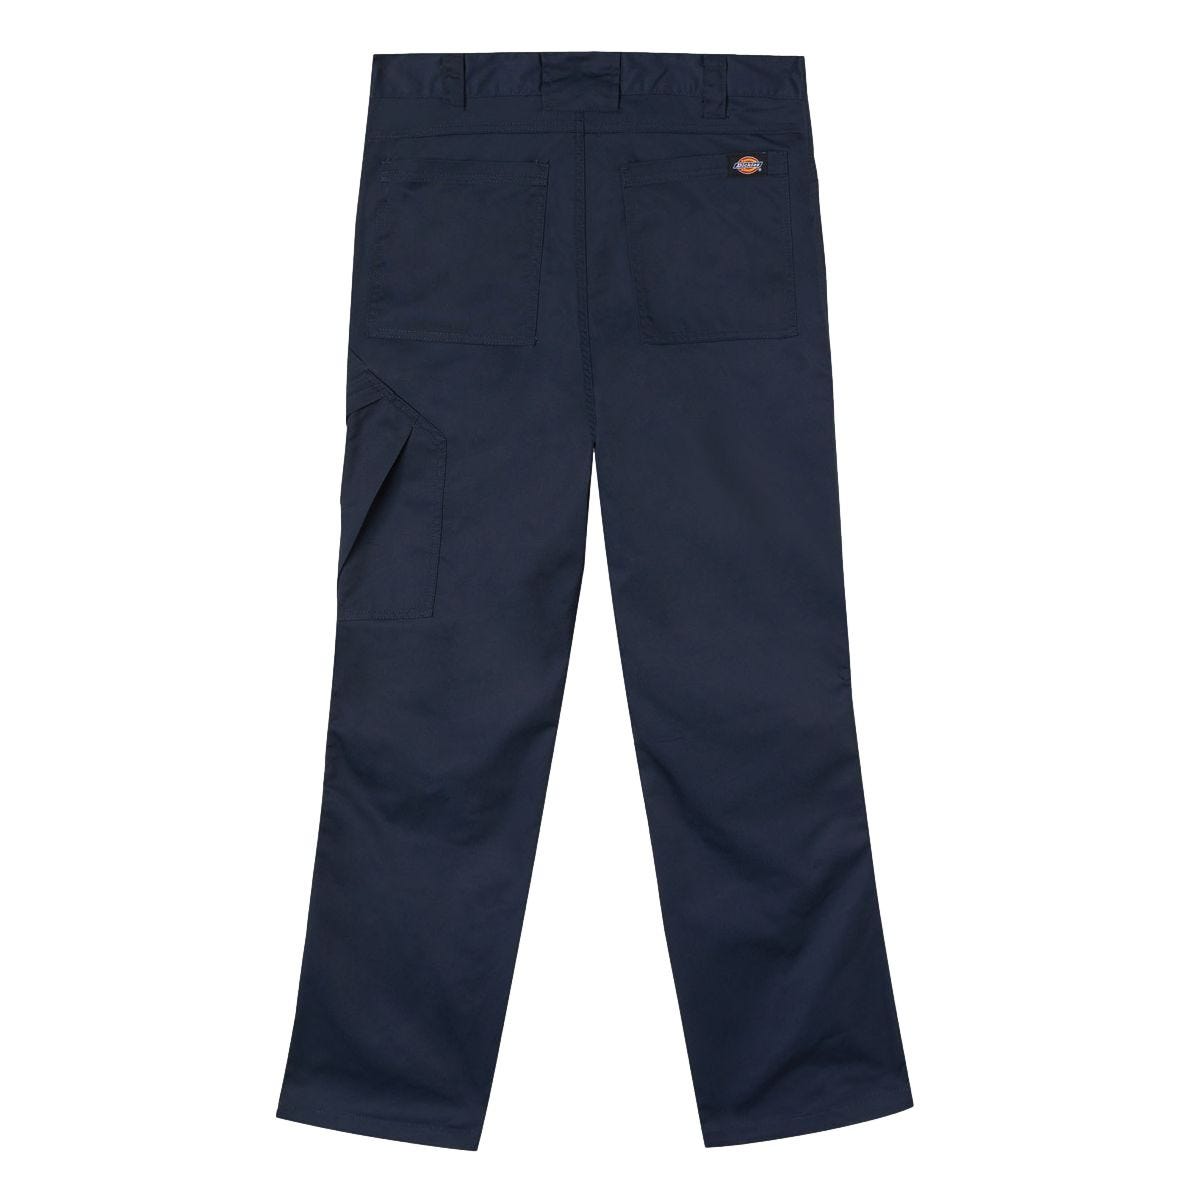 Pantalon de travail Action Flex bleu marine - Dickies - Taille 36 4